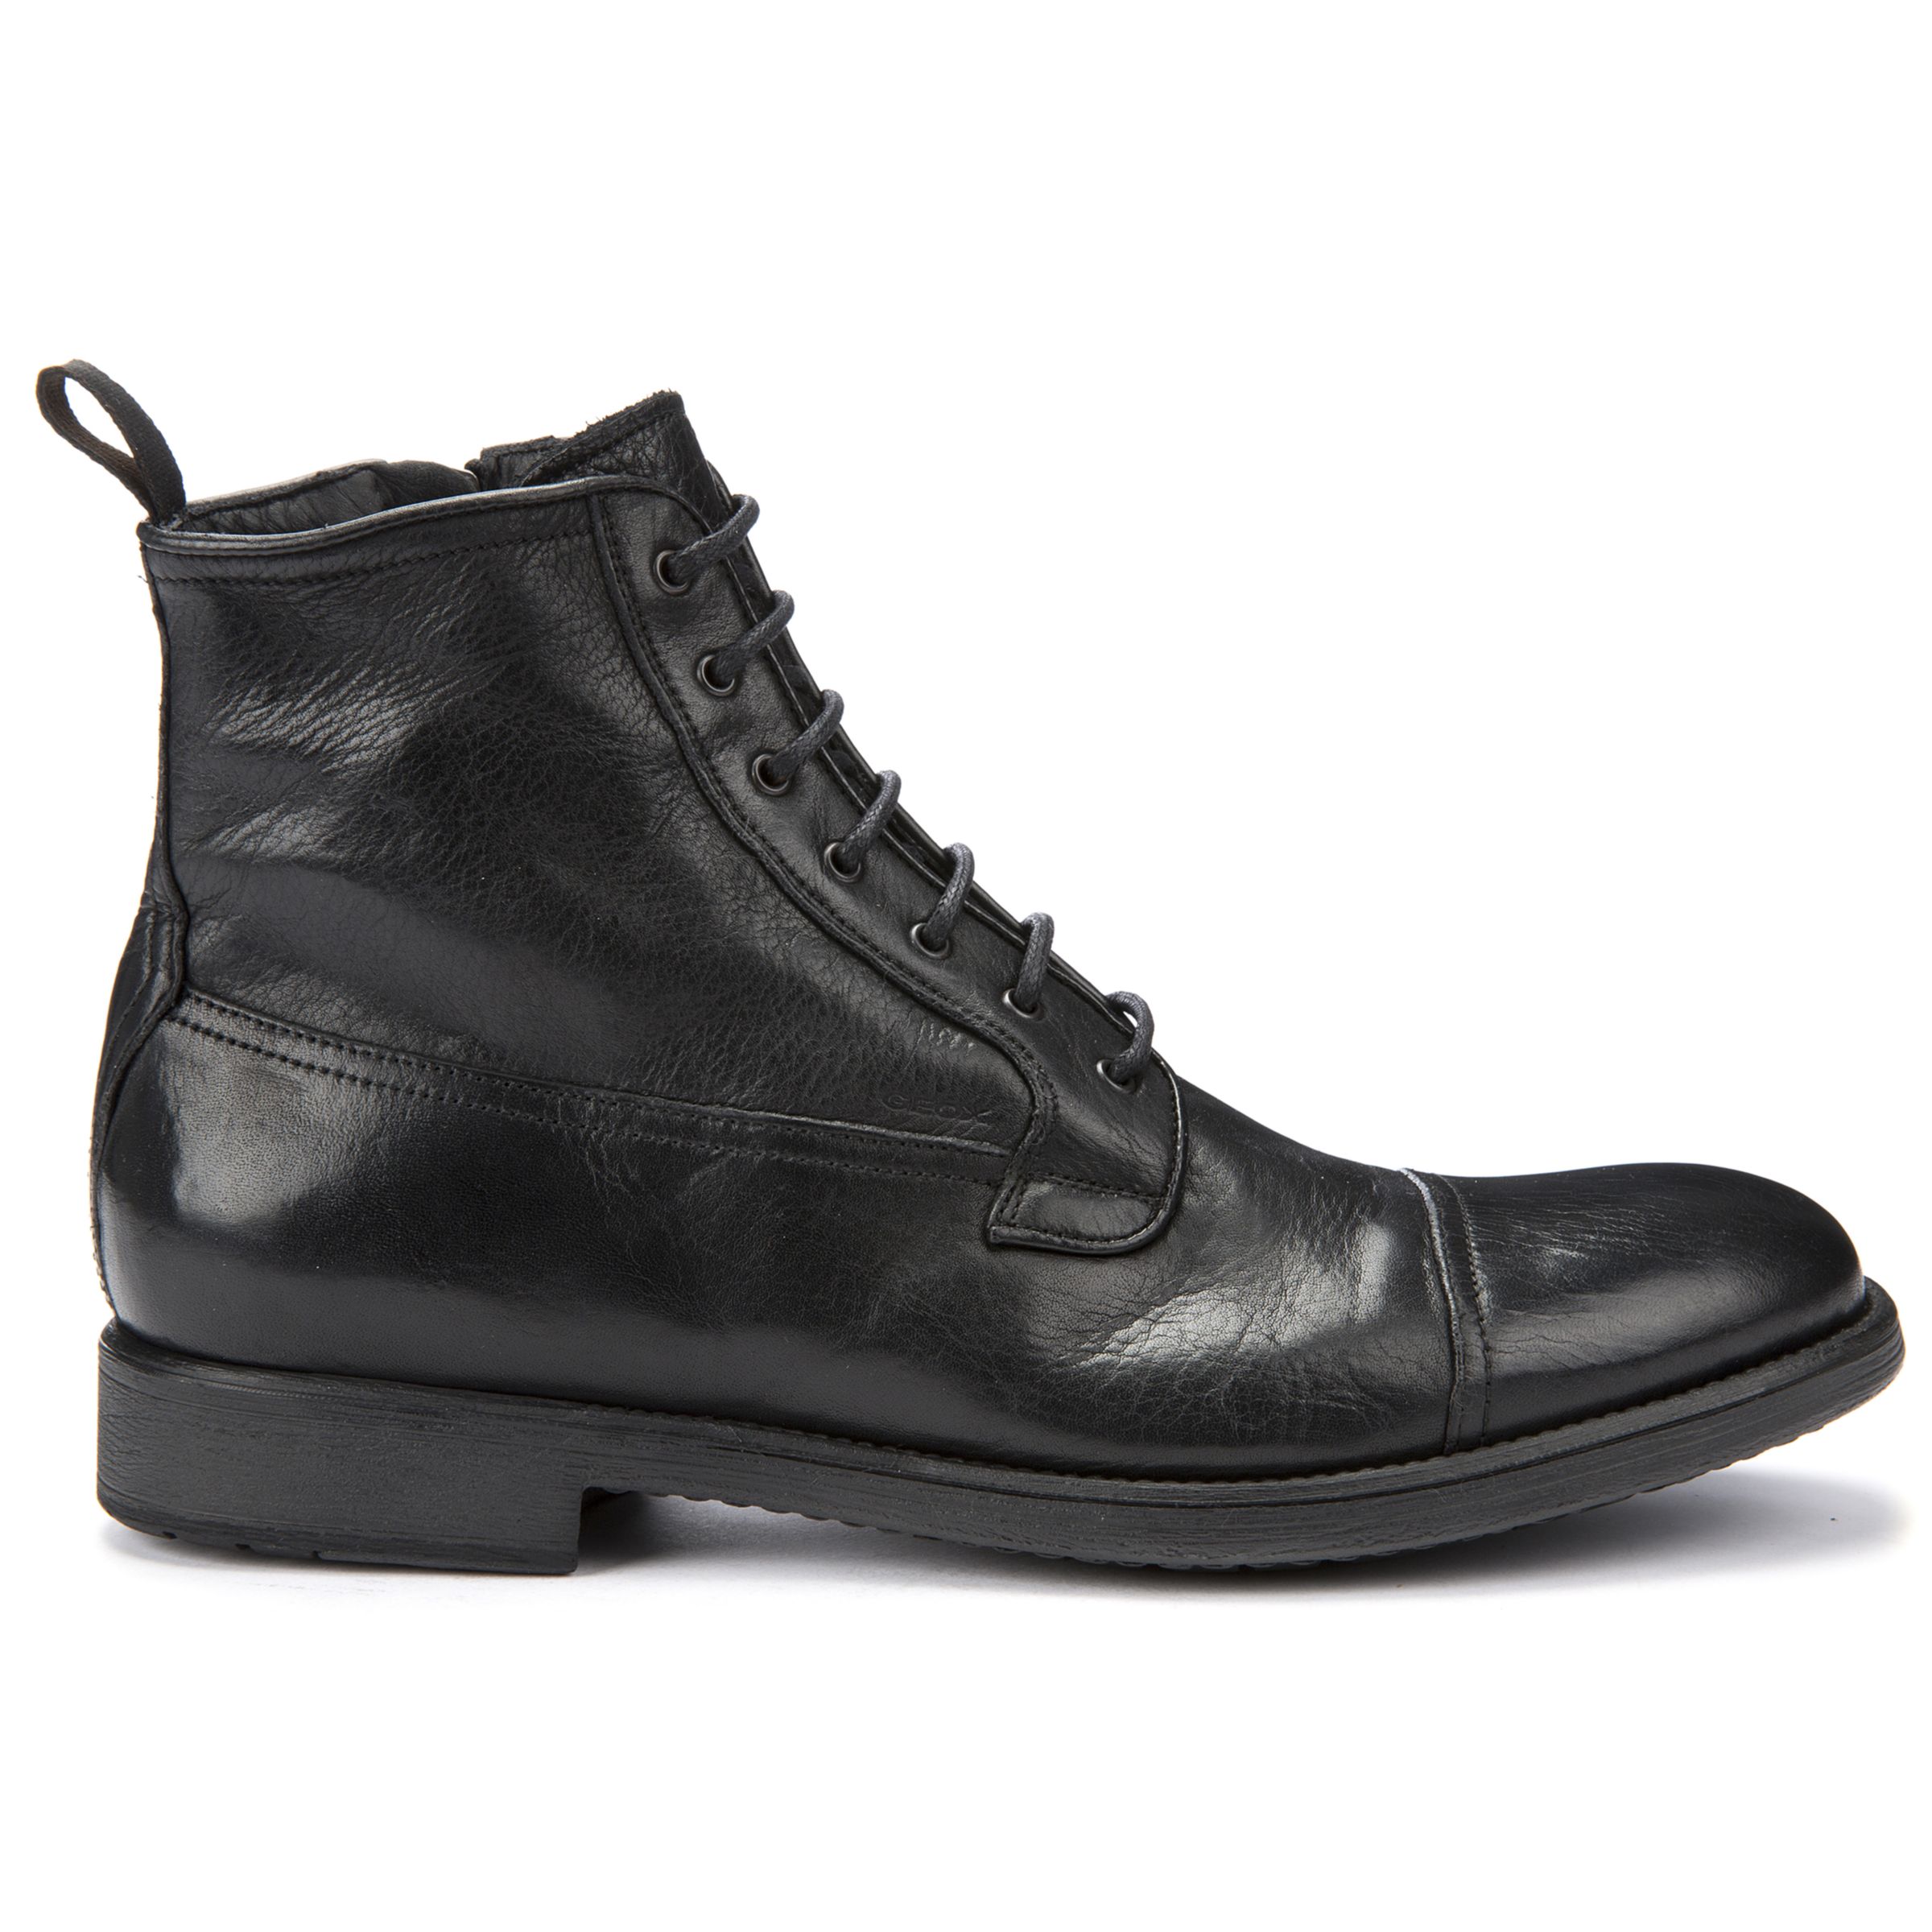 Geox Jaylon Leather Lace Up Boots, Black